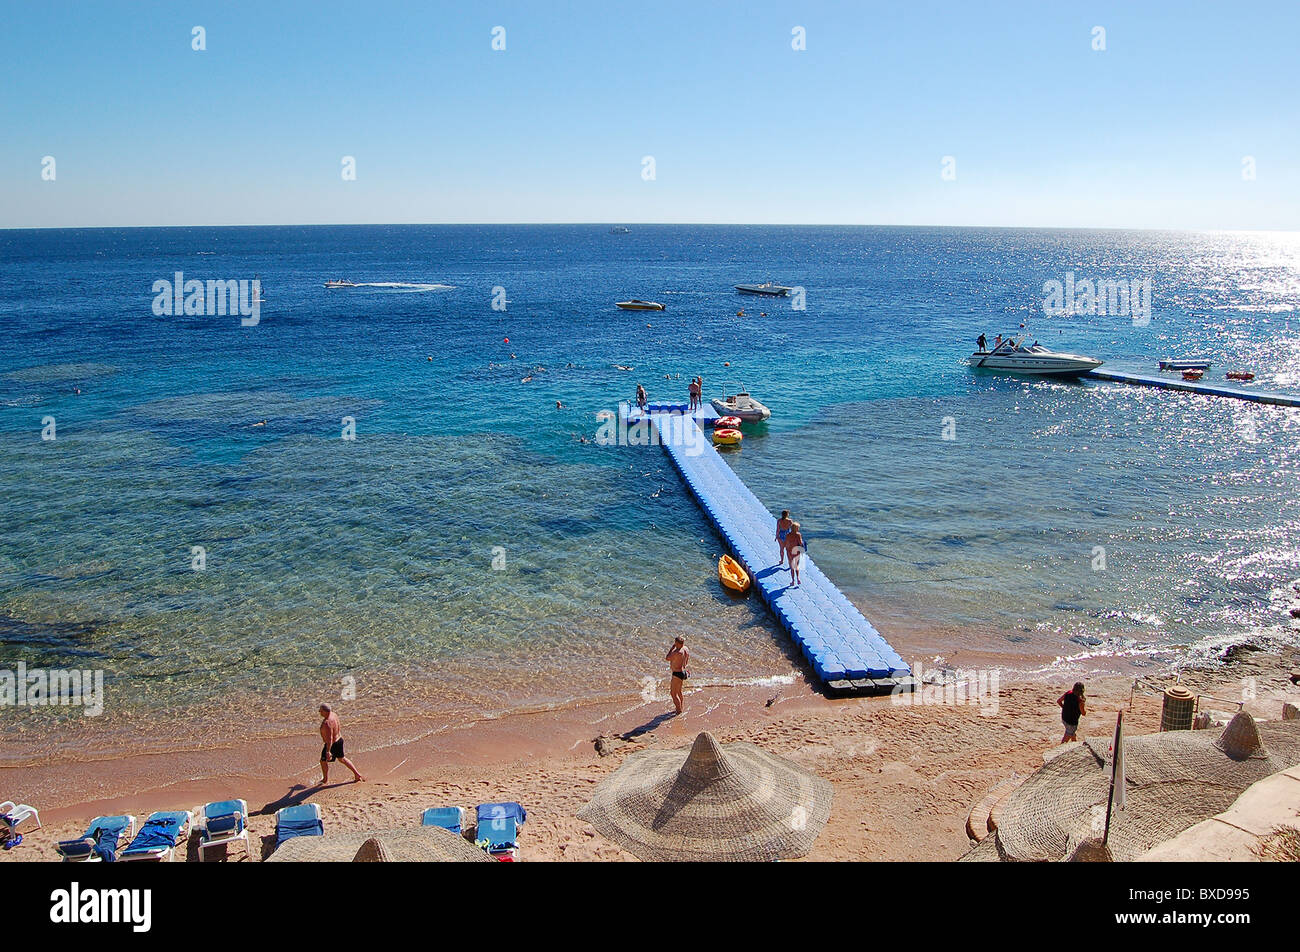 Reef at the beach of luxury hotel, Sharm el Sheikh, Egypt Stock Photo